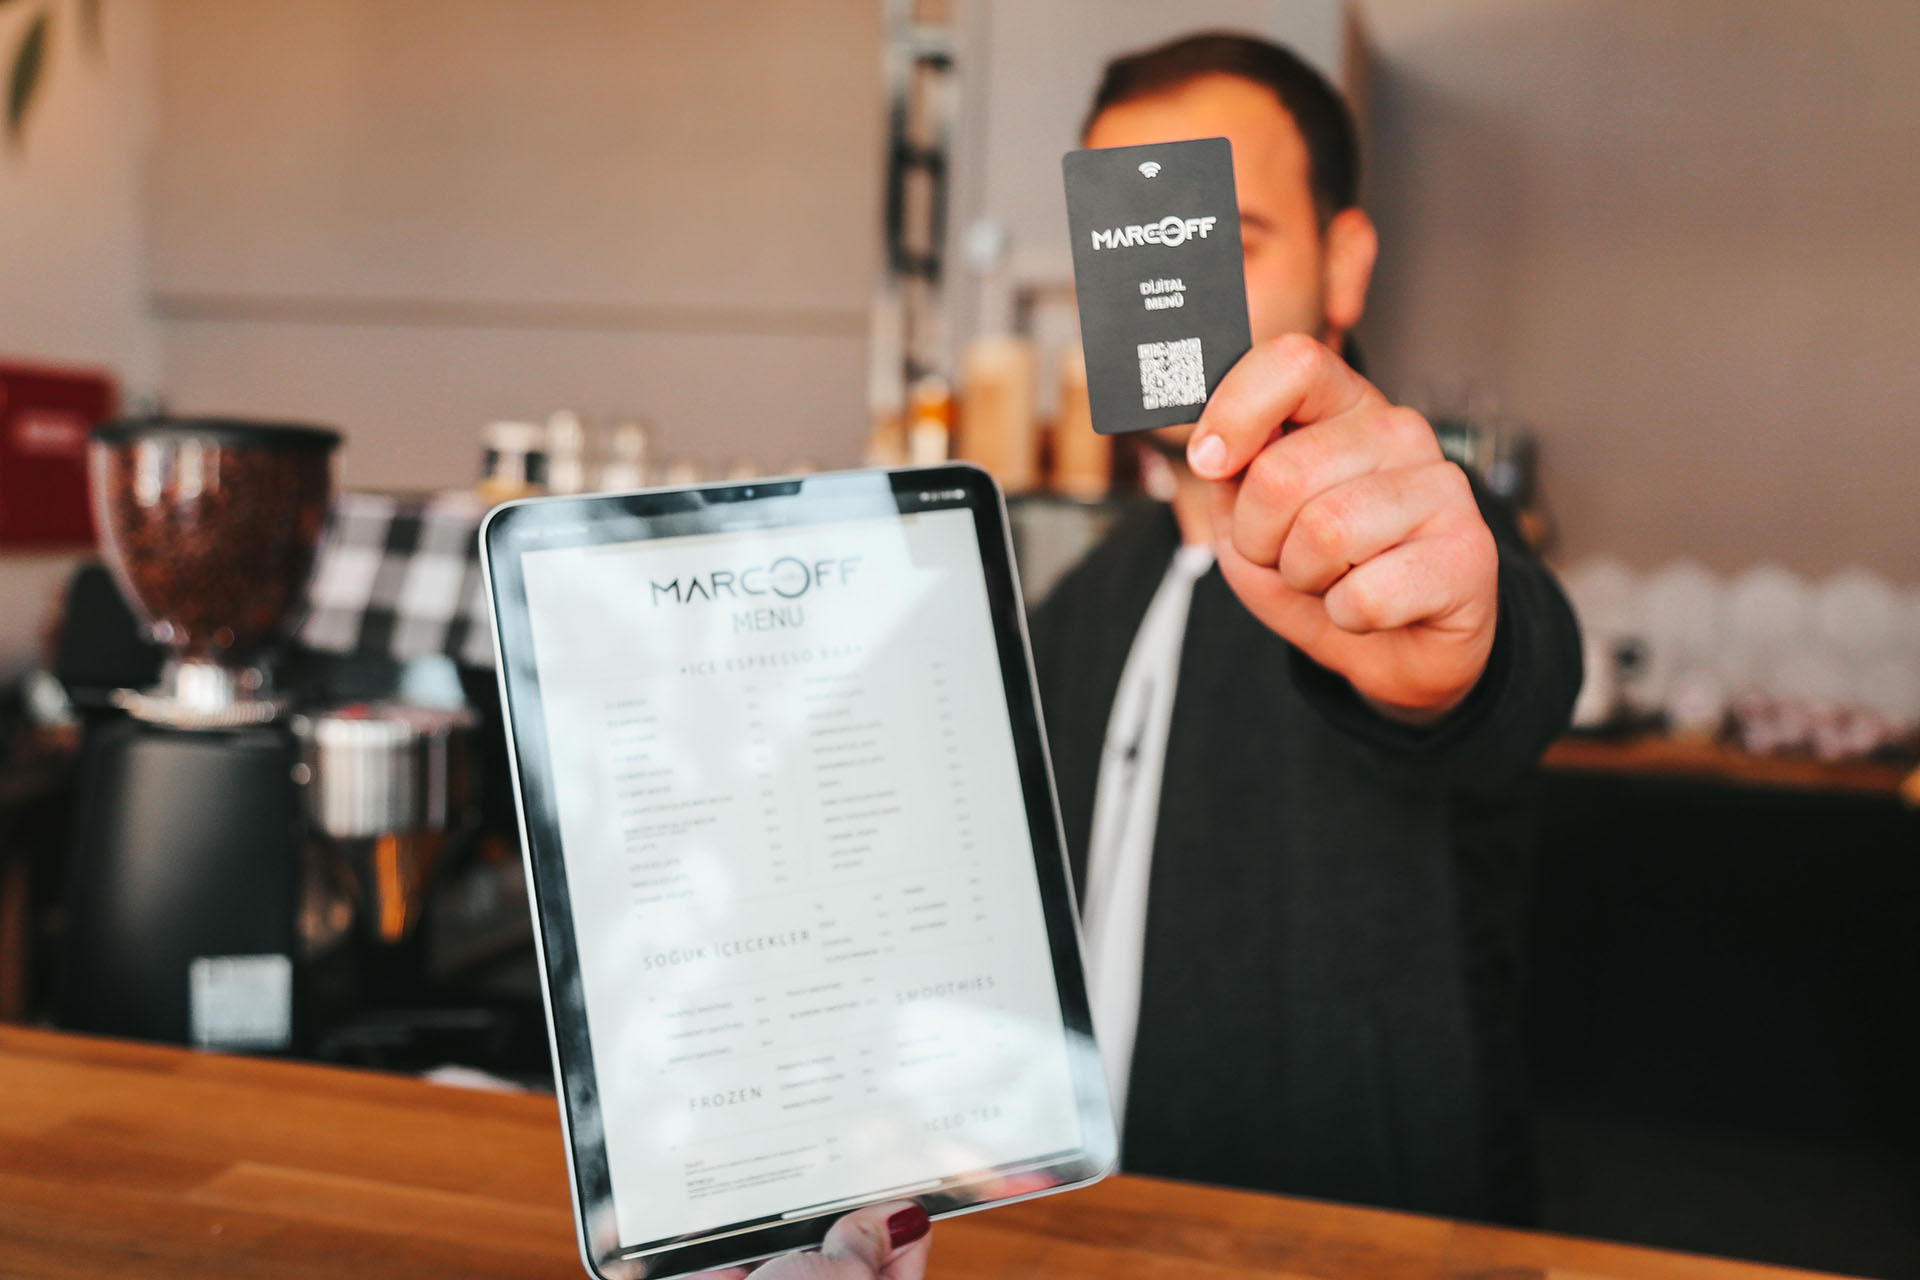 NFC Digital Business Card, NFC Digital Menu for Business and Cafes